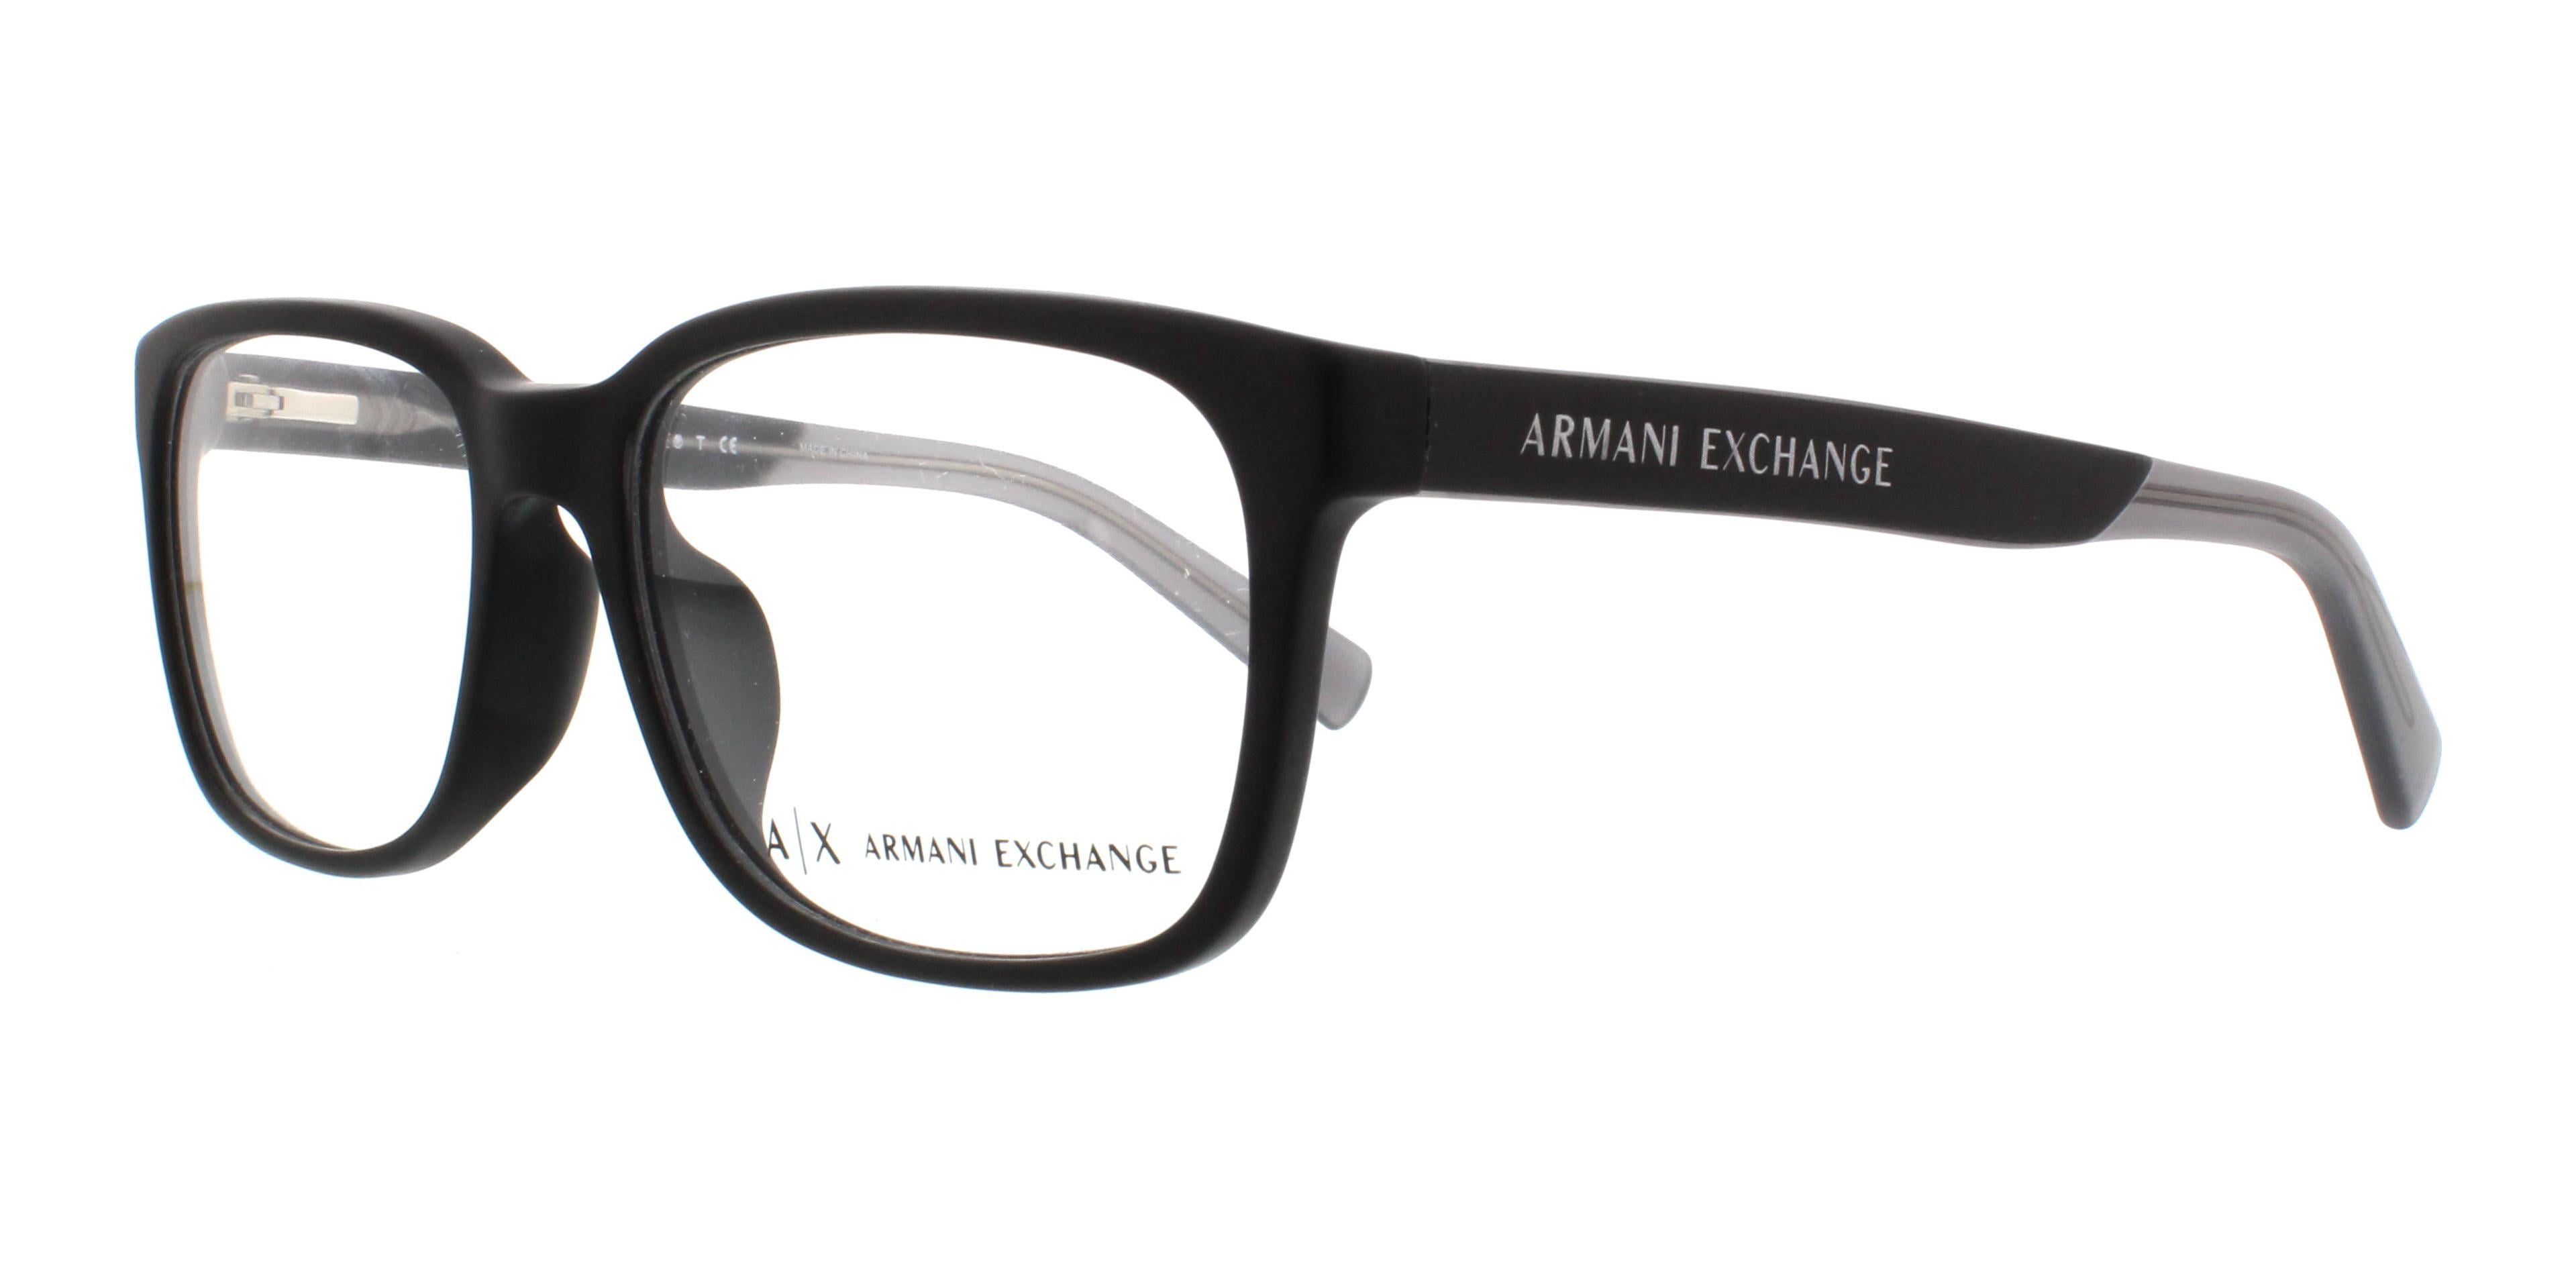 ax armani exchange glasses